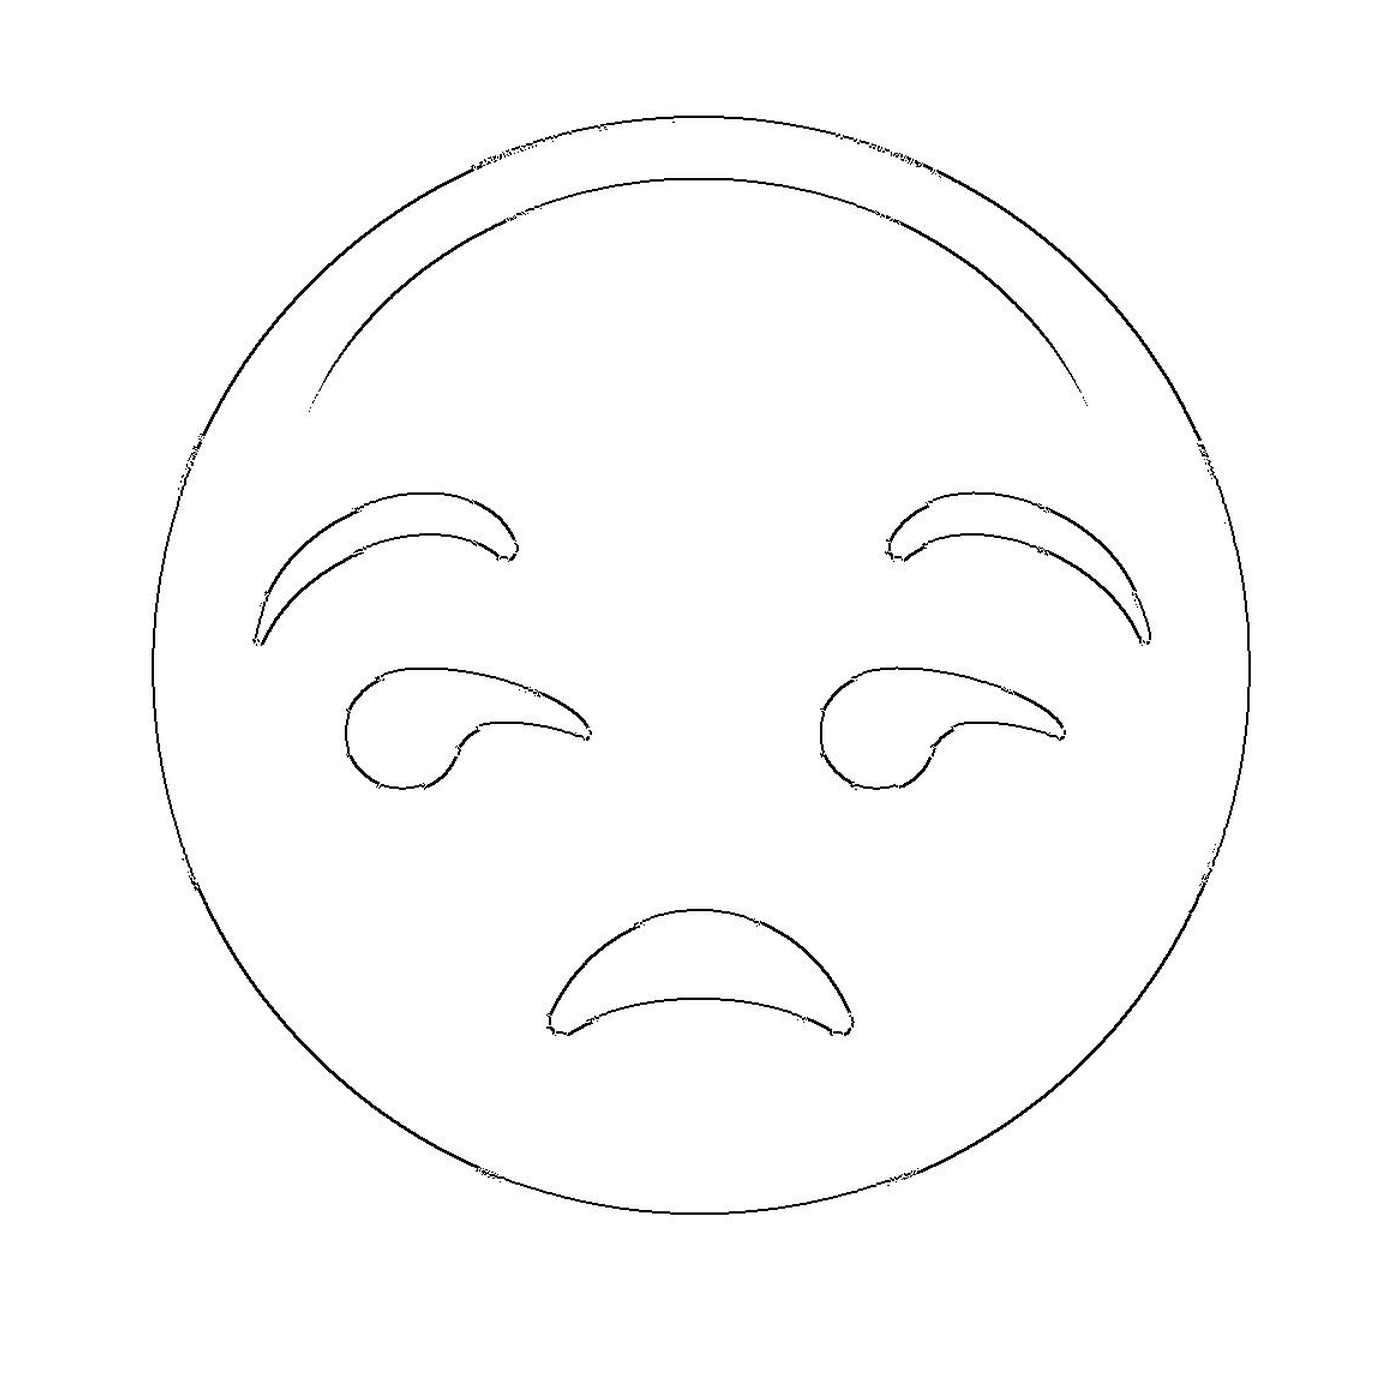  A sad face drawn 